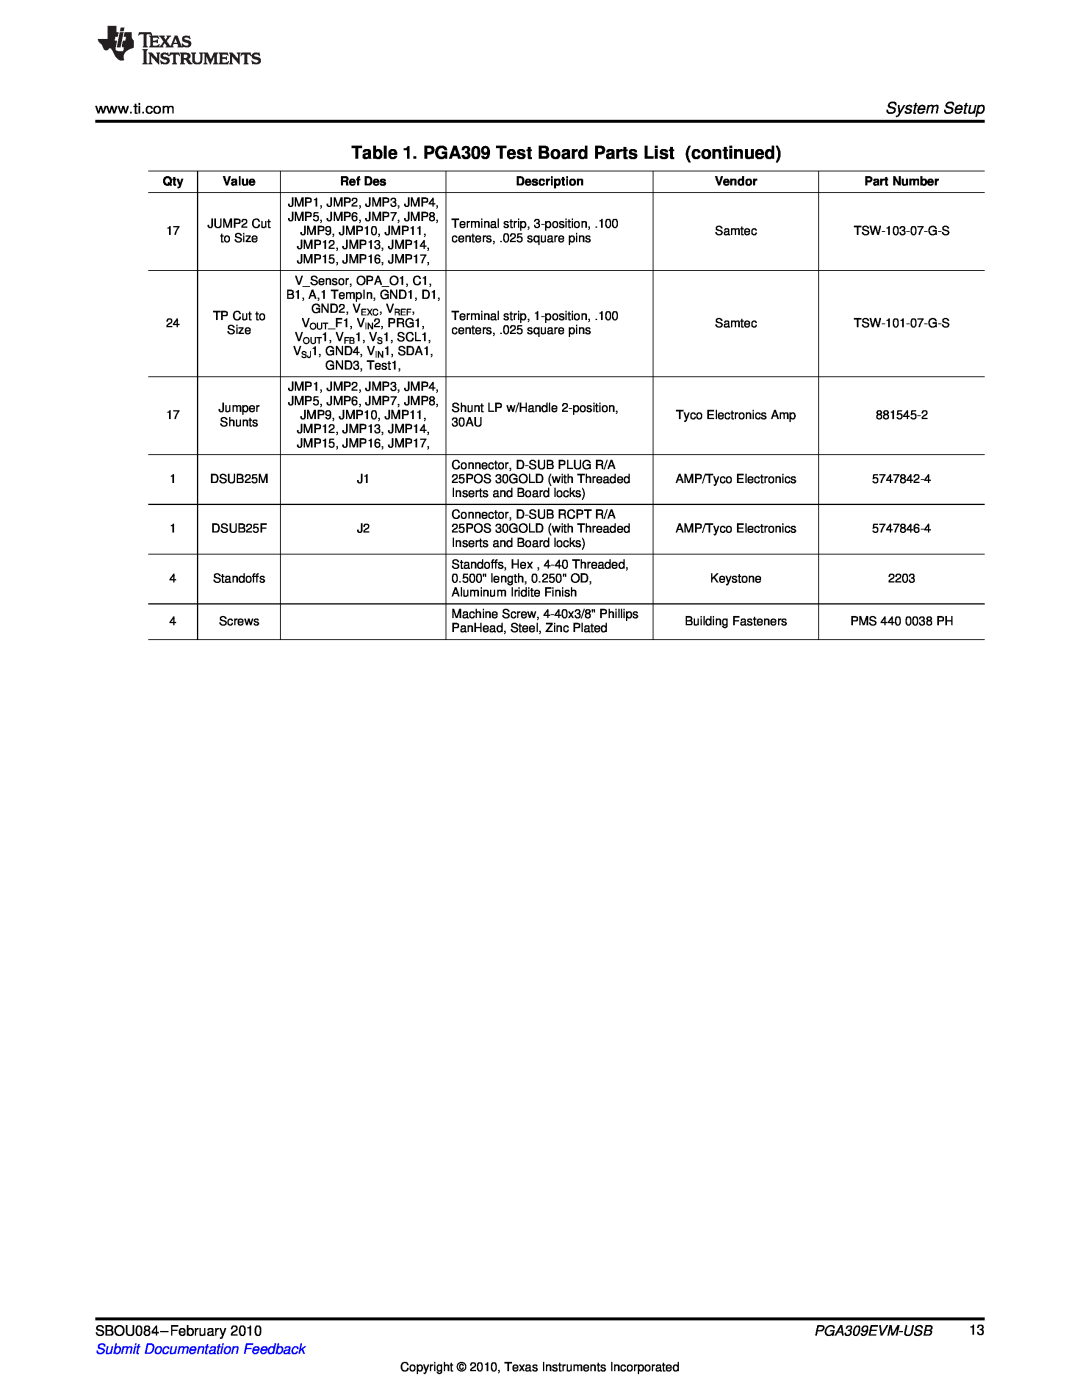 Texas Instruments PGA309EVM-USB PGA309 Test Board Parts List, continued, Submit Documentation Feedback, Value, Ref Des 